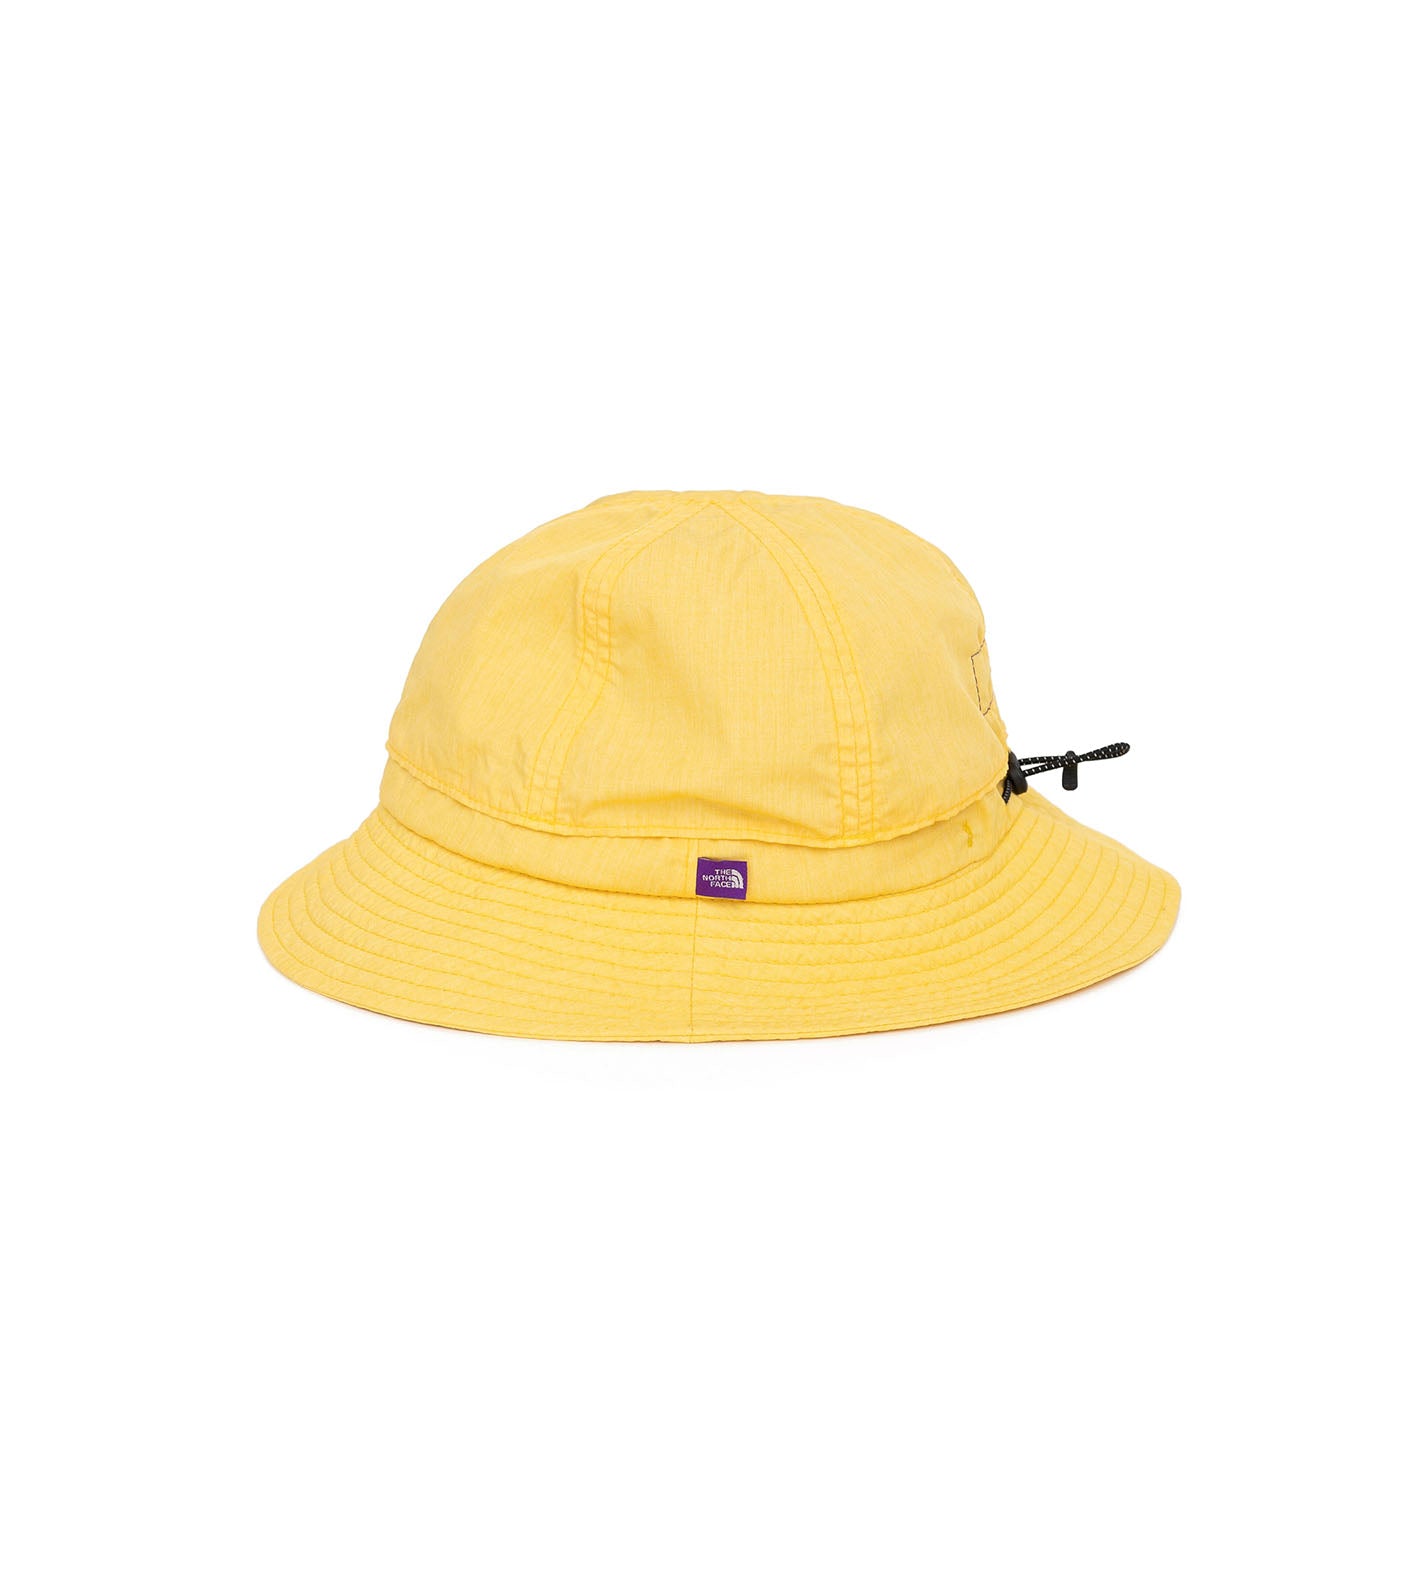 THE NORTH FACE PURPLE LABEL Garment Dye Field Hat